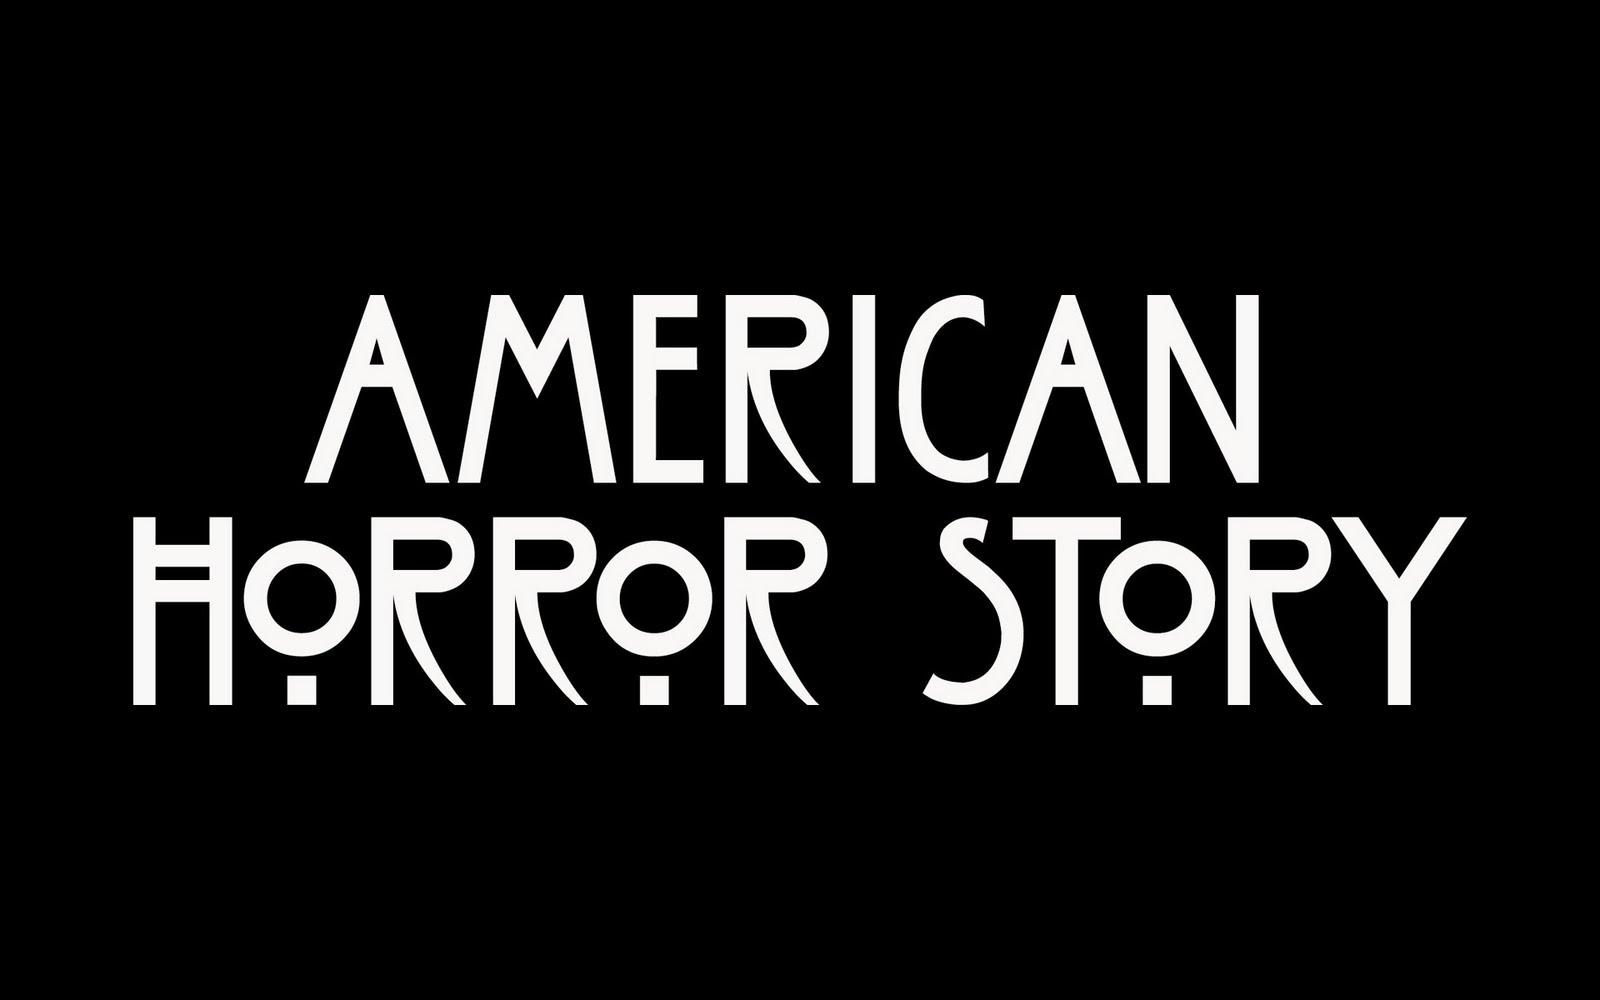 Download American Horror Story Logo Wallpaper 65224 1600x1000 px